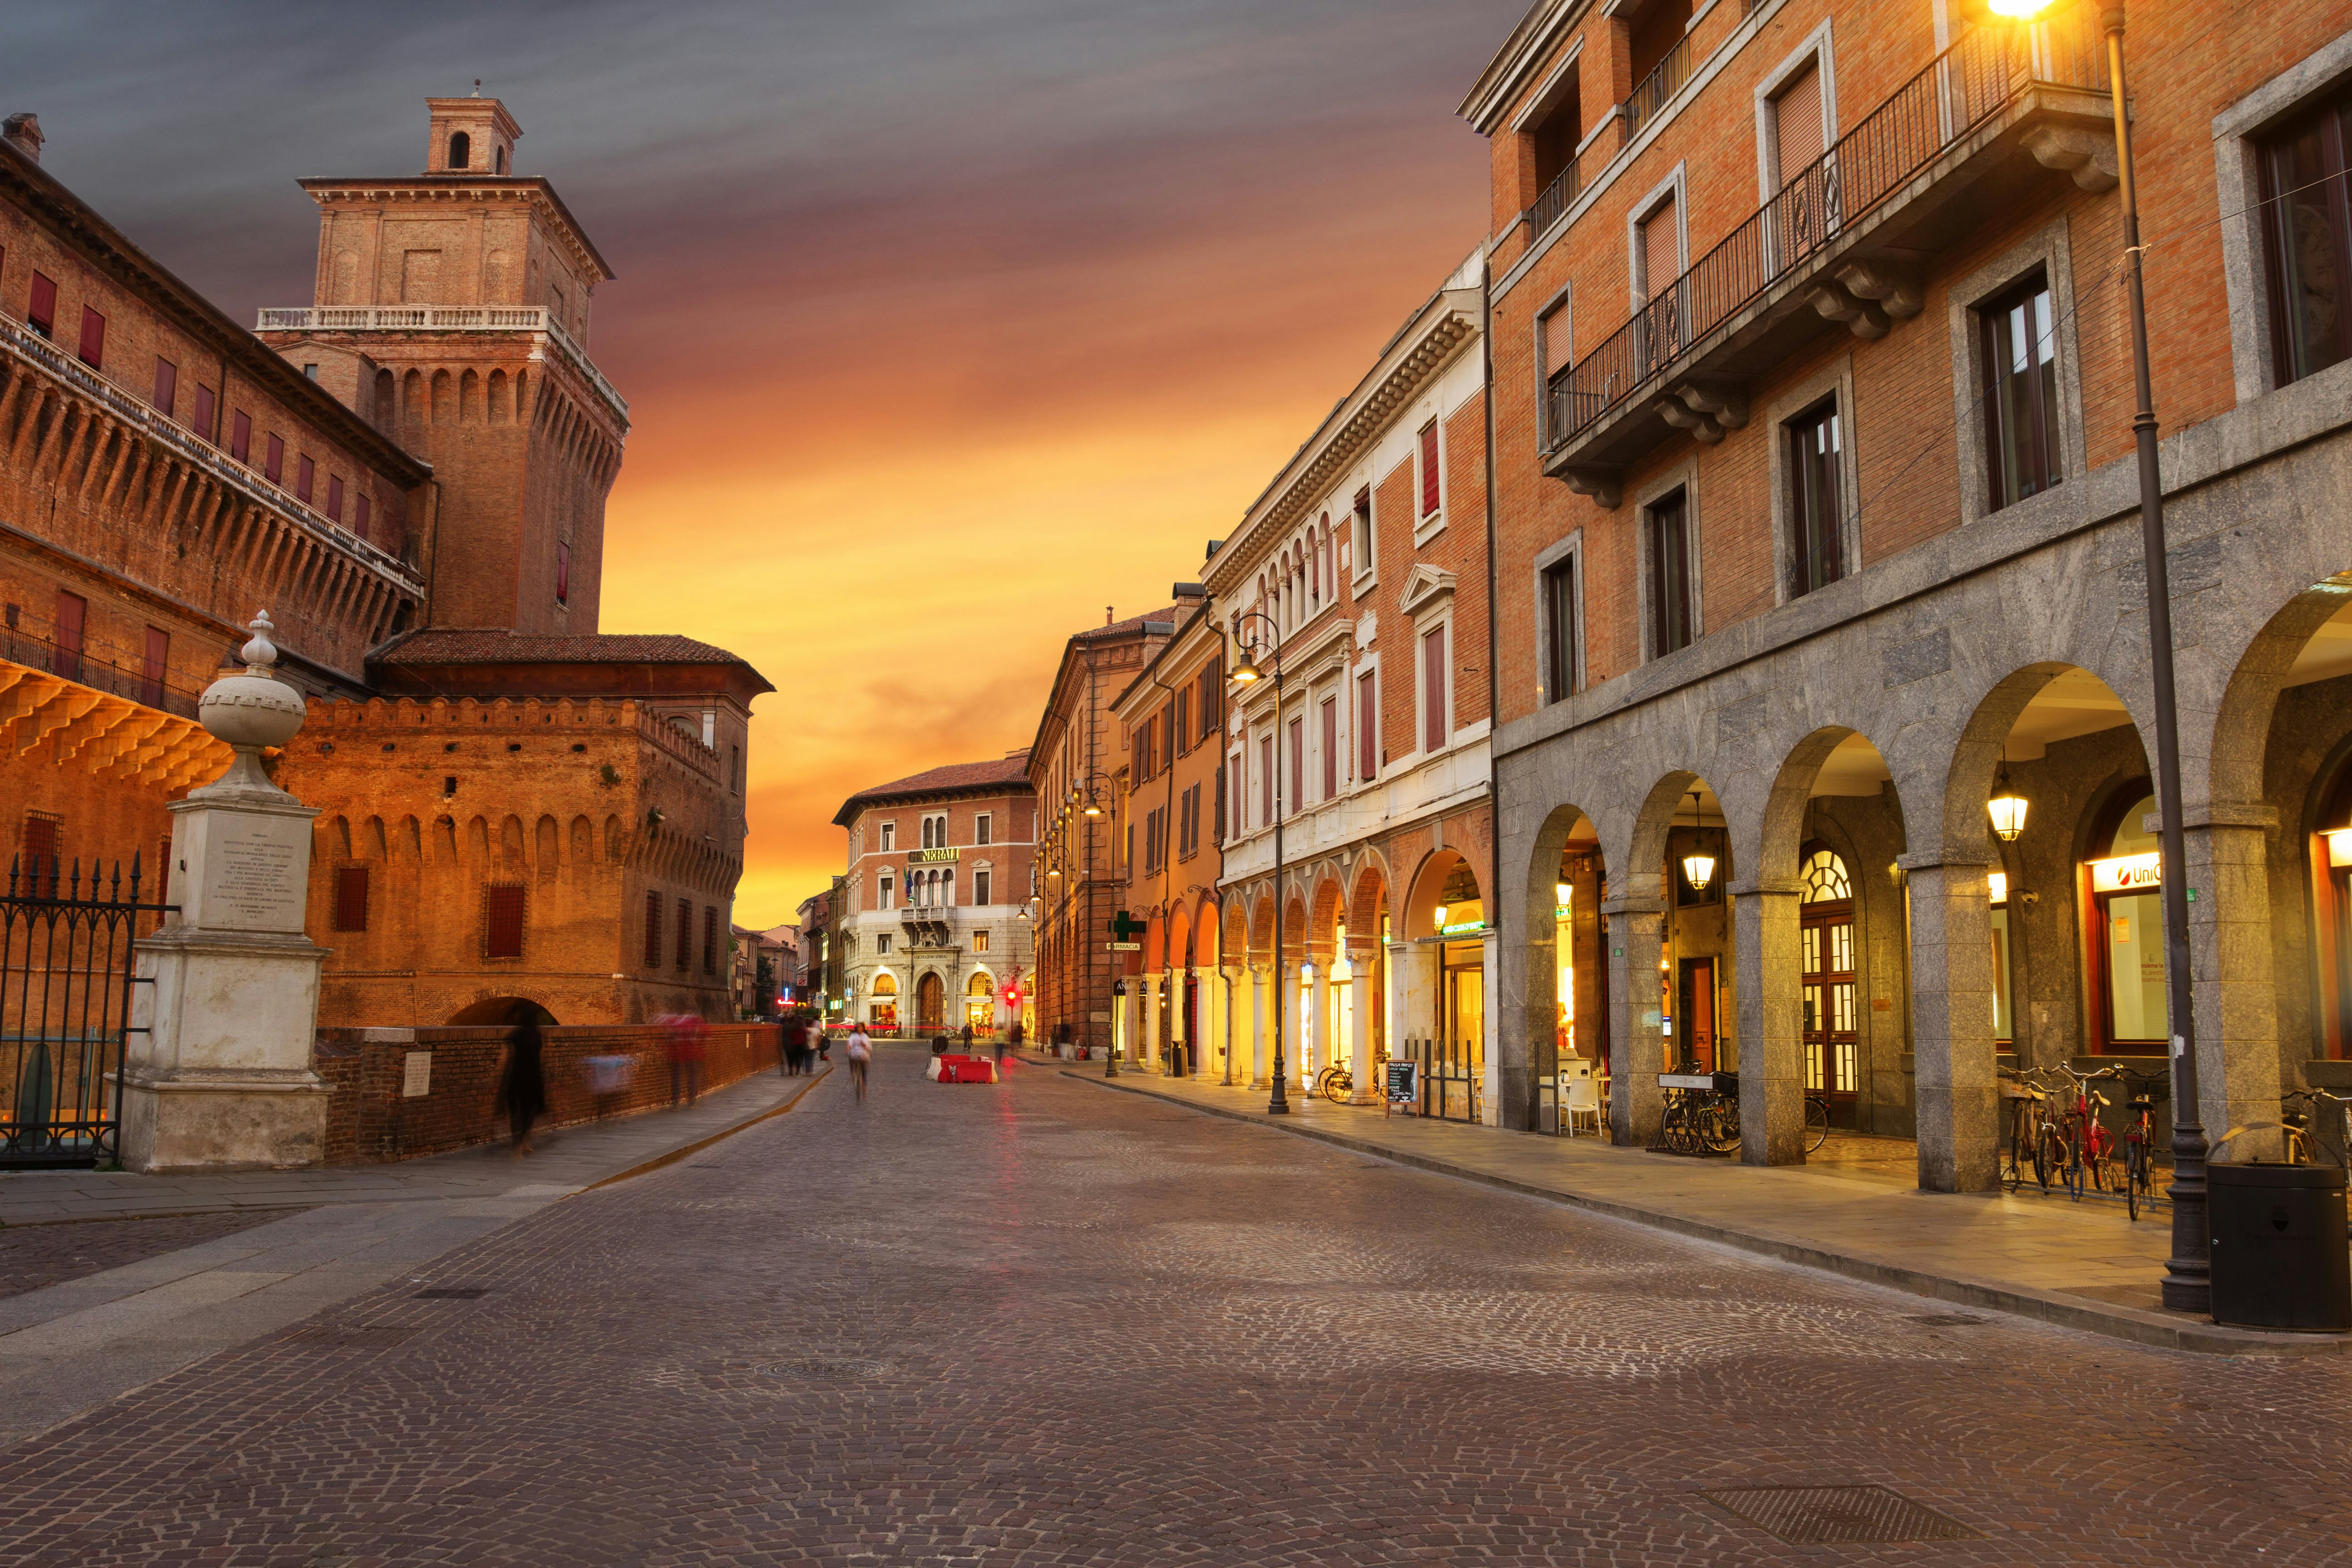 A street in Ferrara, Italy as sunset